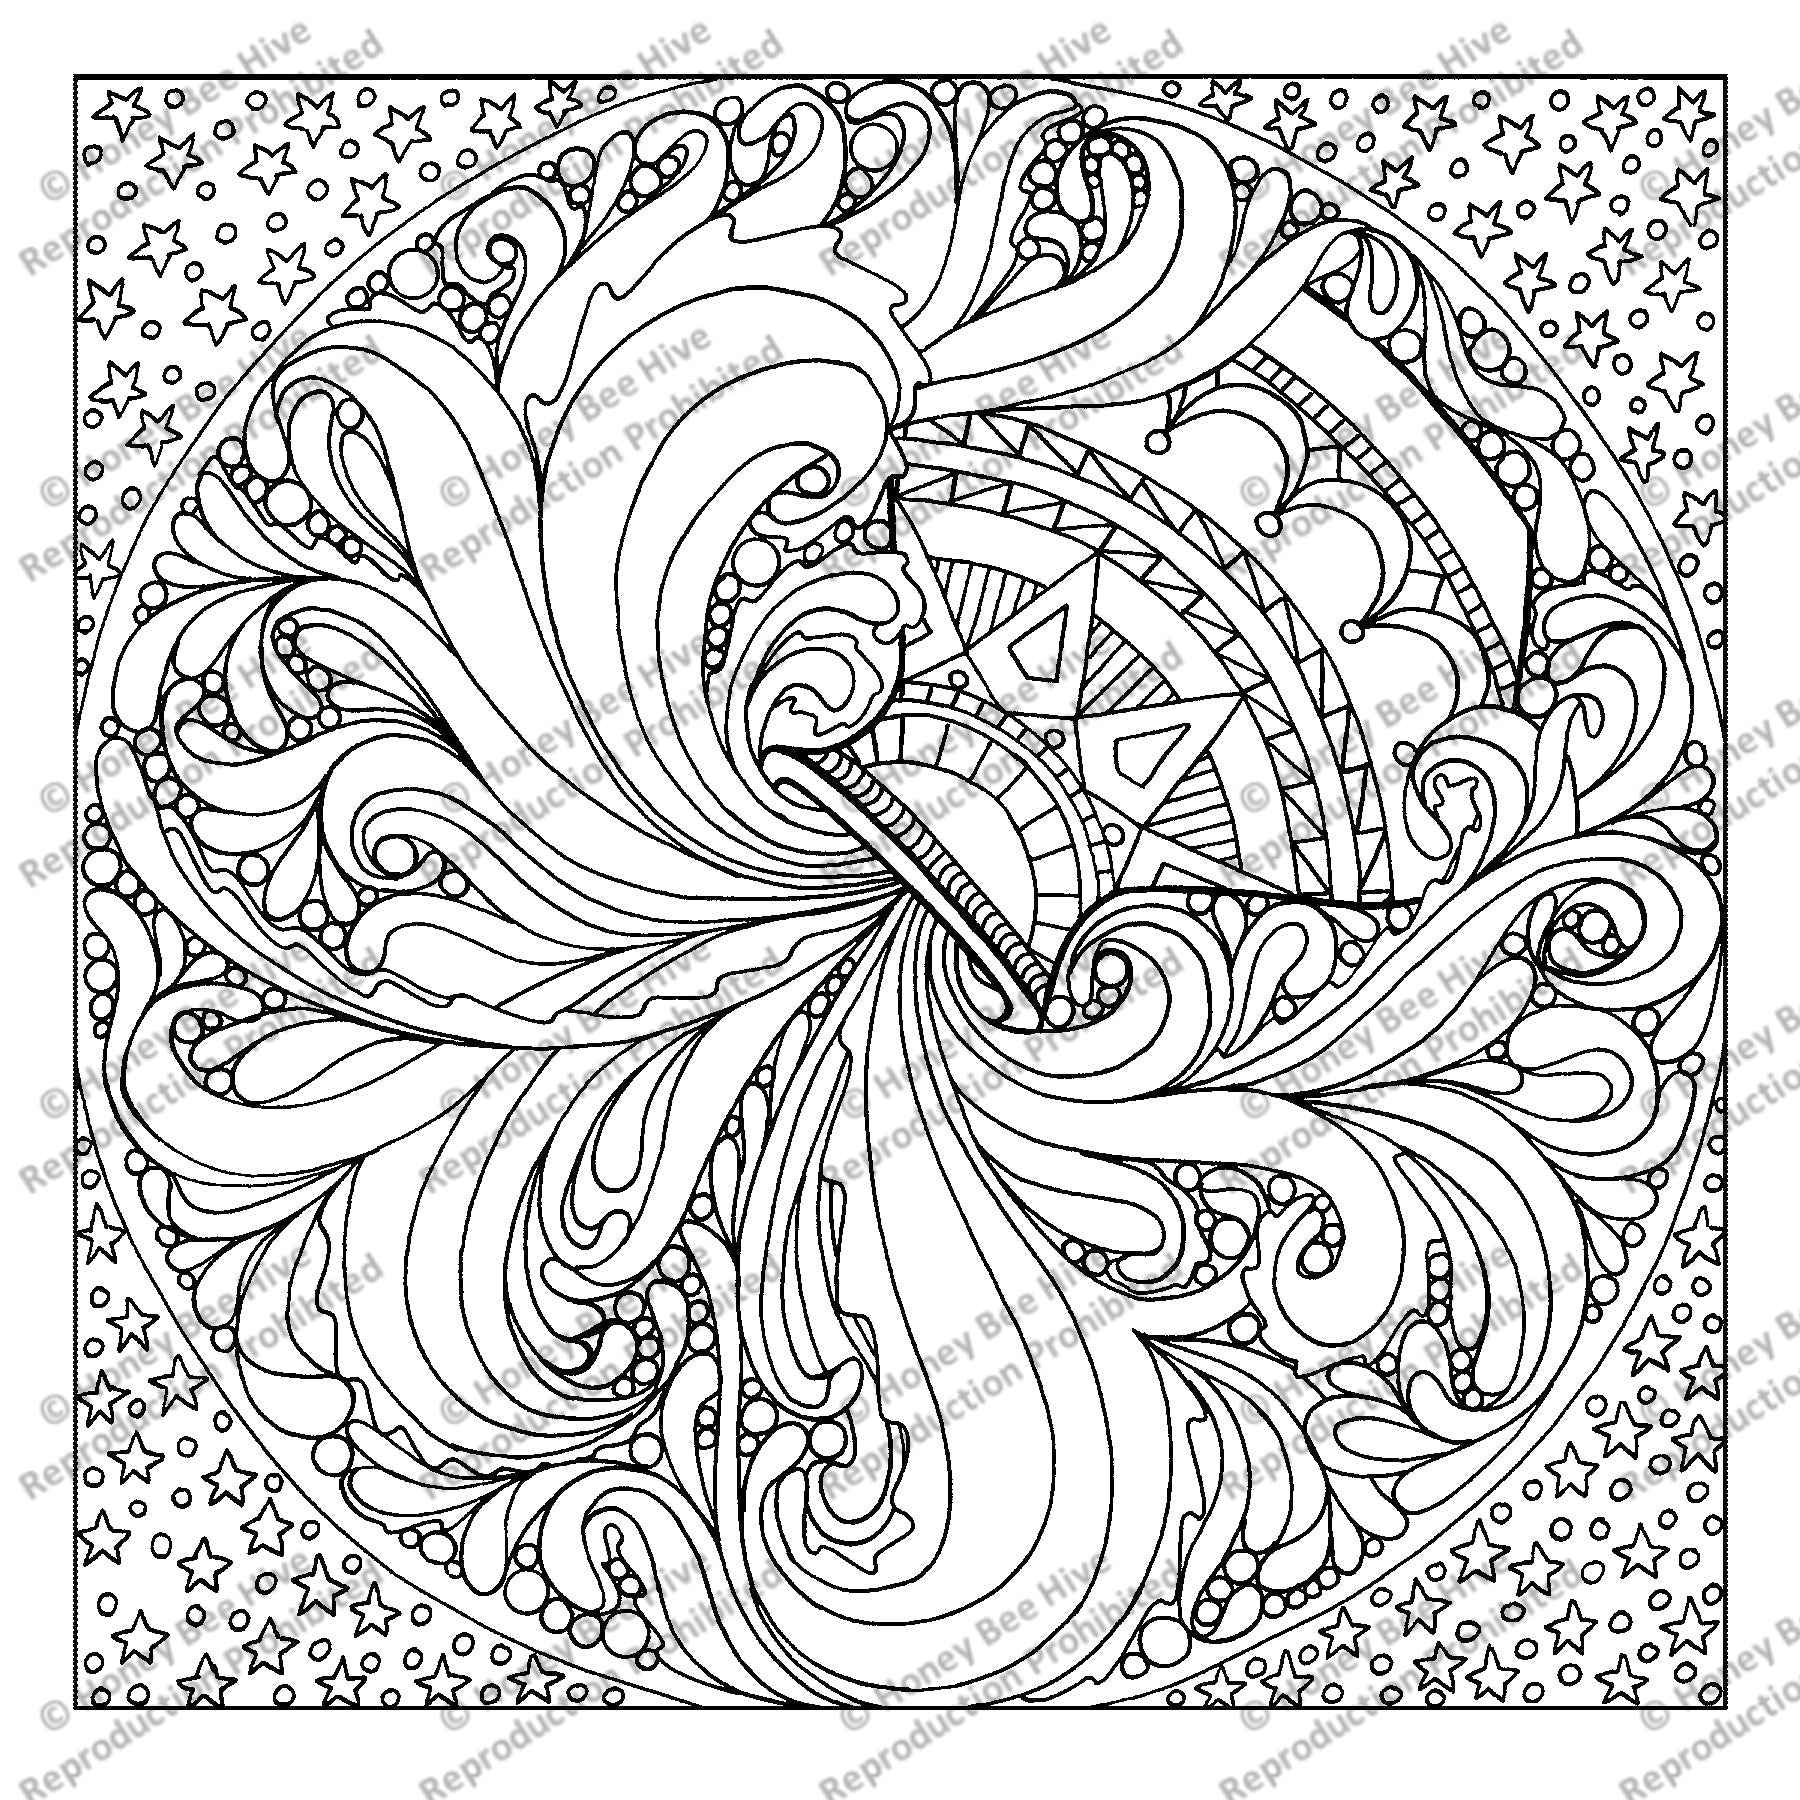 Aquarius, rug hooking pattern